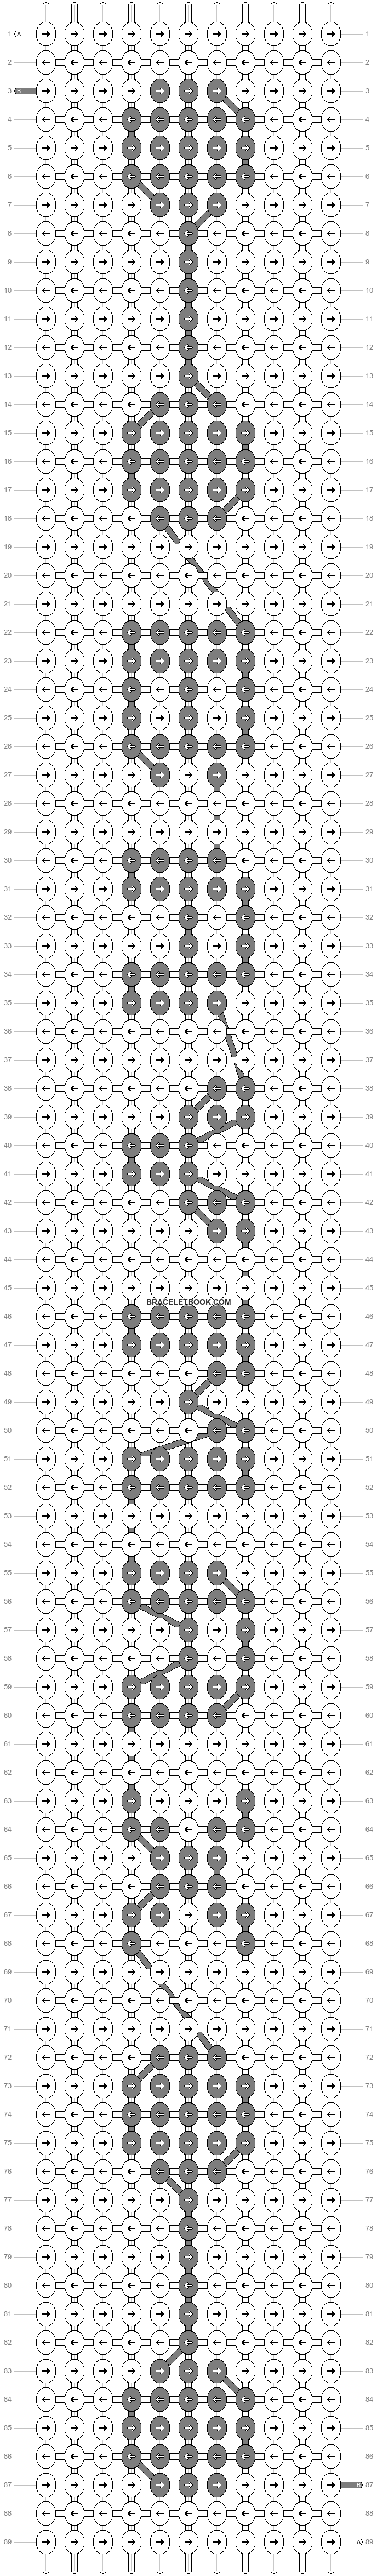 Alpha pattern #17464 pattern